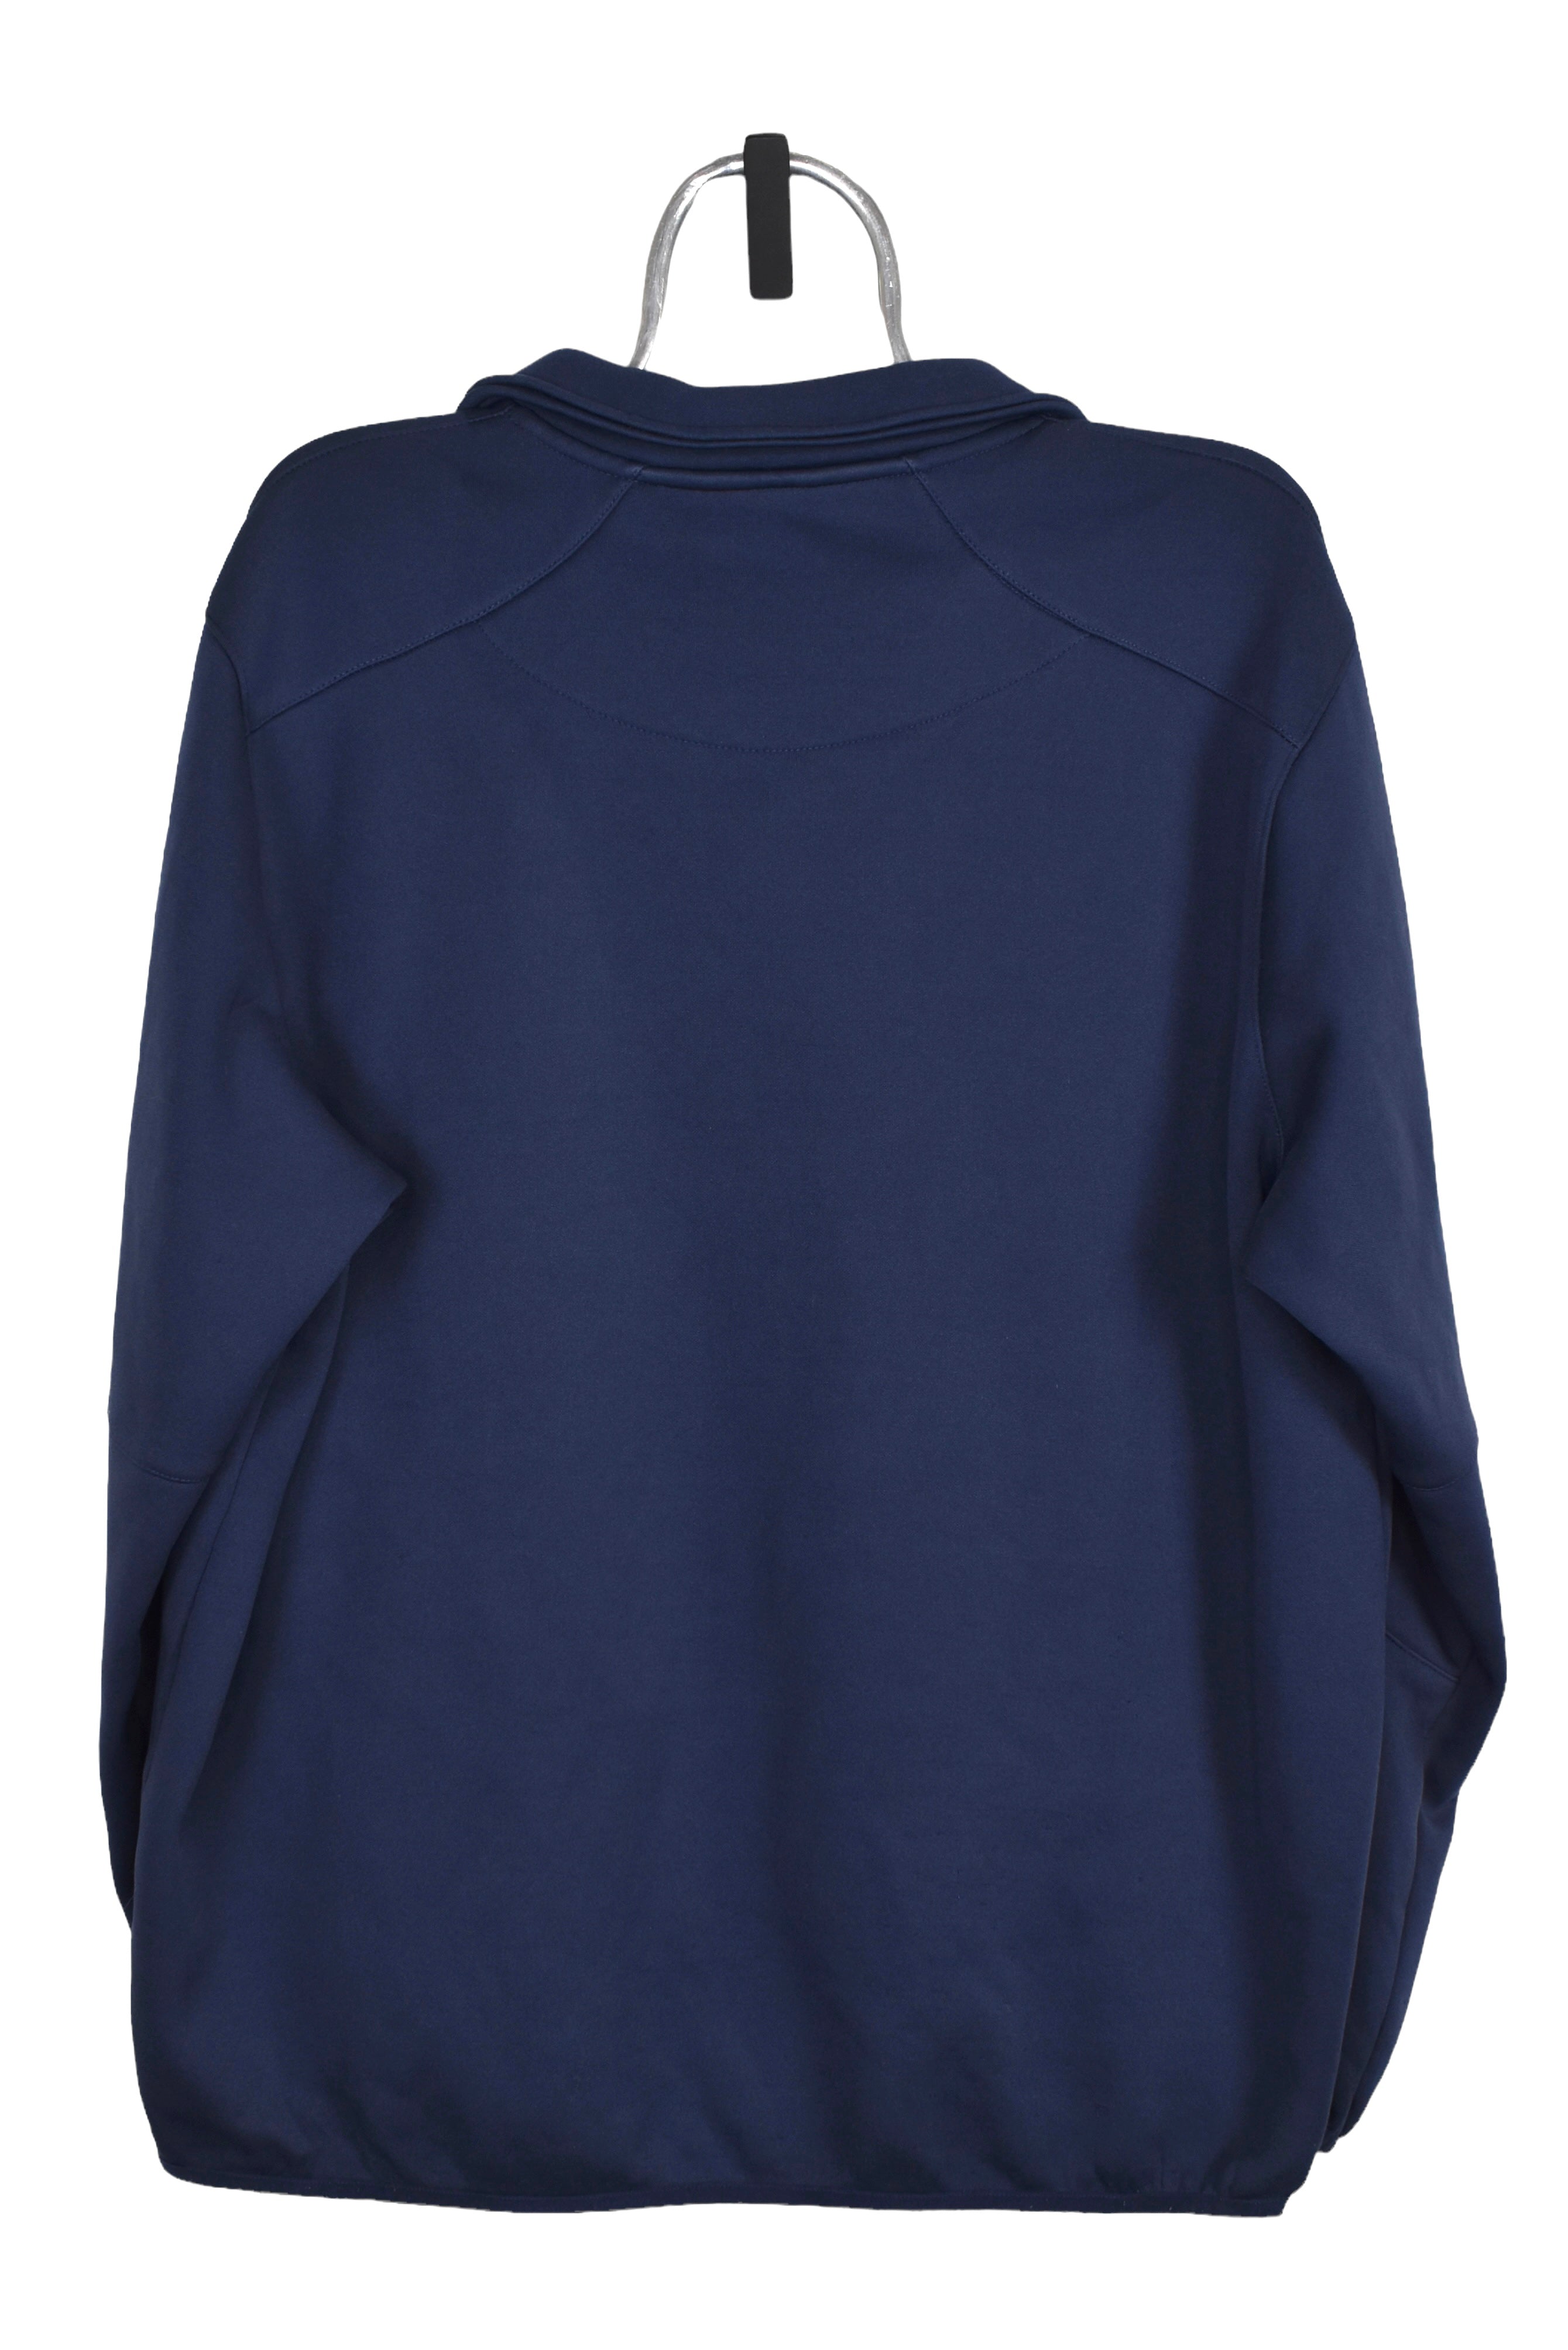 Vintage Seattle Seahawks 1/4 zip (XL), navy NFL embroidered sweatshirt